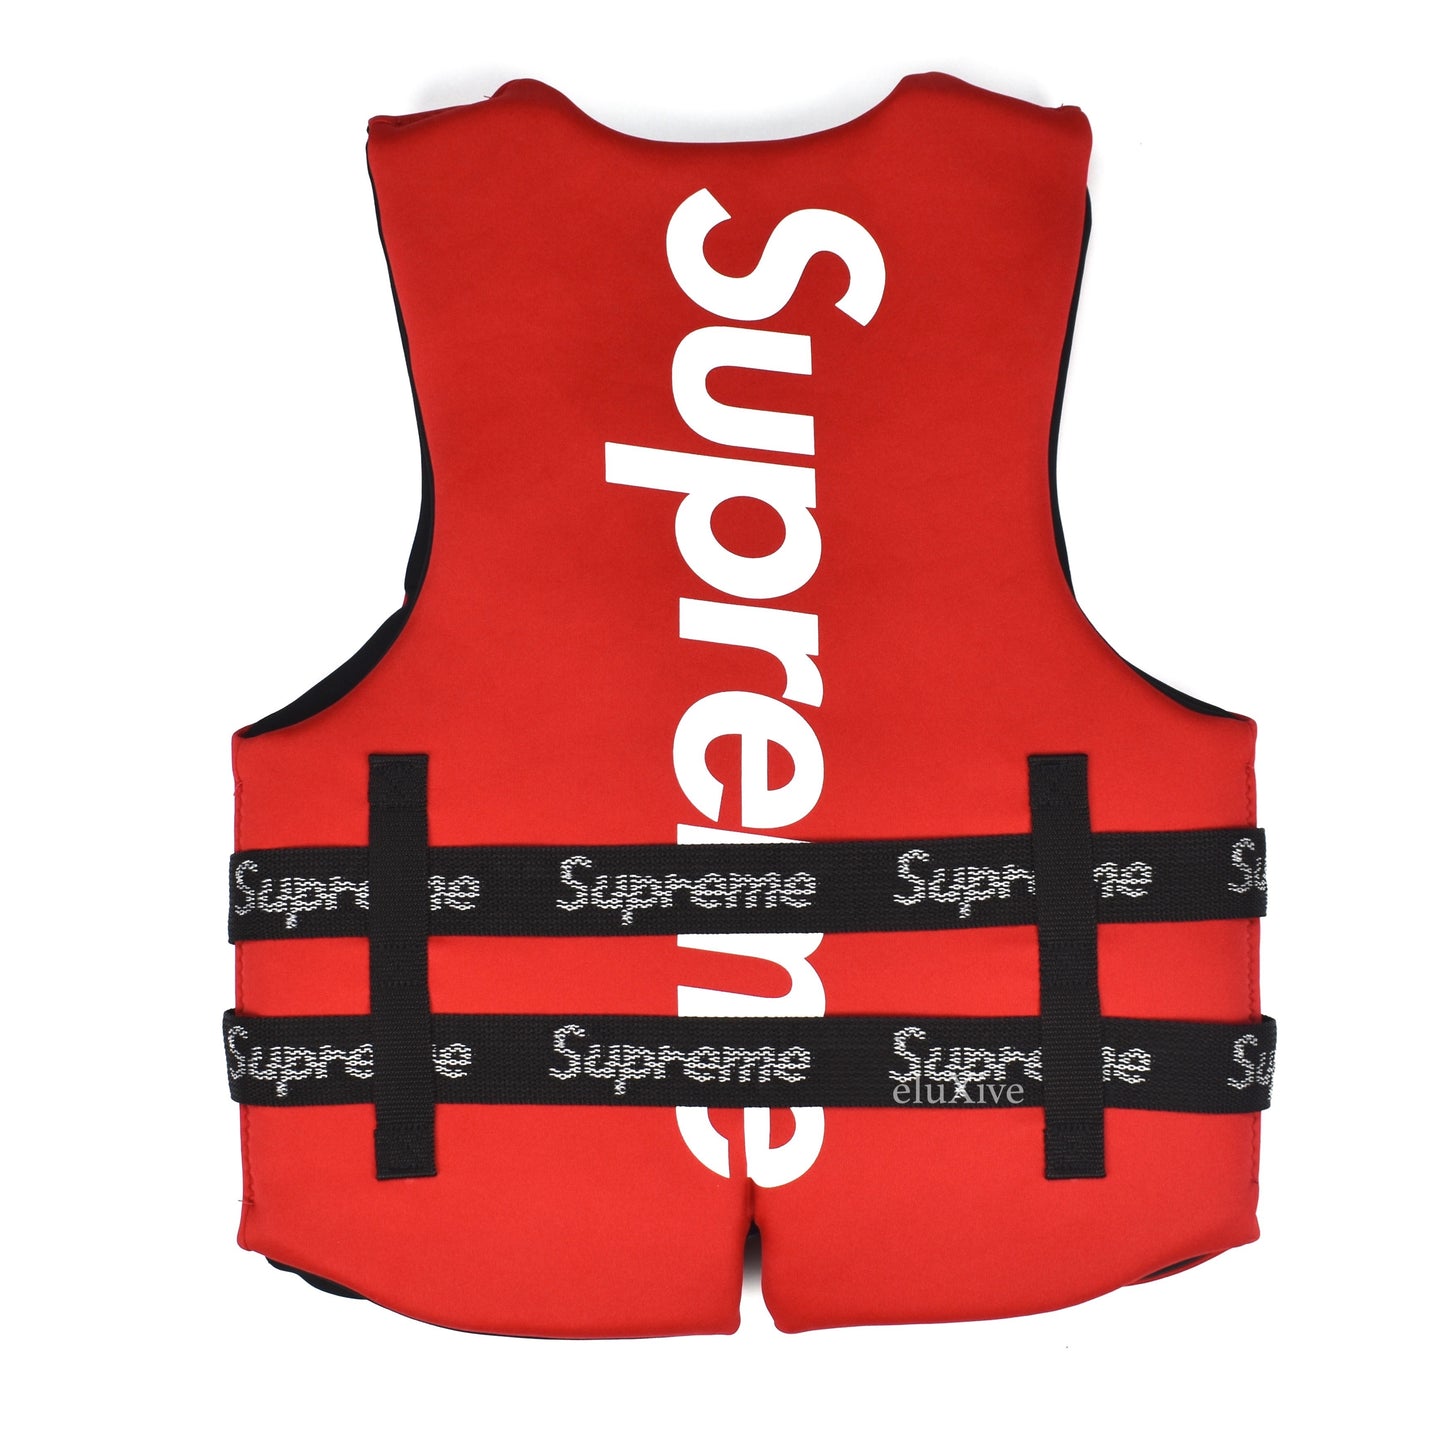 Supreme x O'Brien - Red Box Logo Life Vest / Floatation Device – eluXive